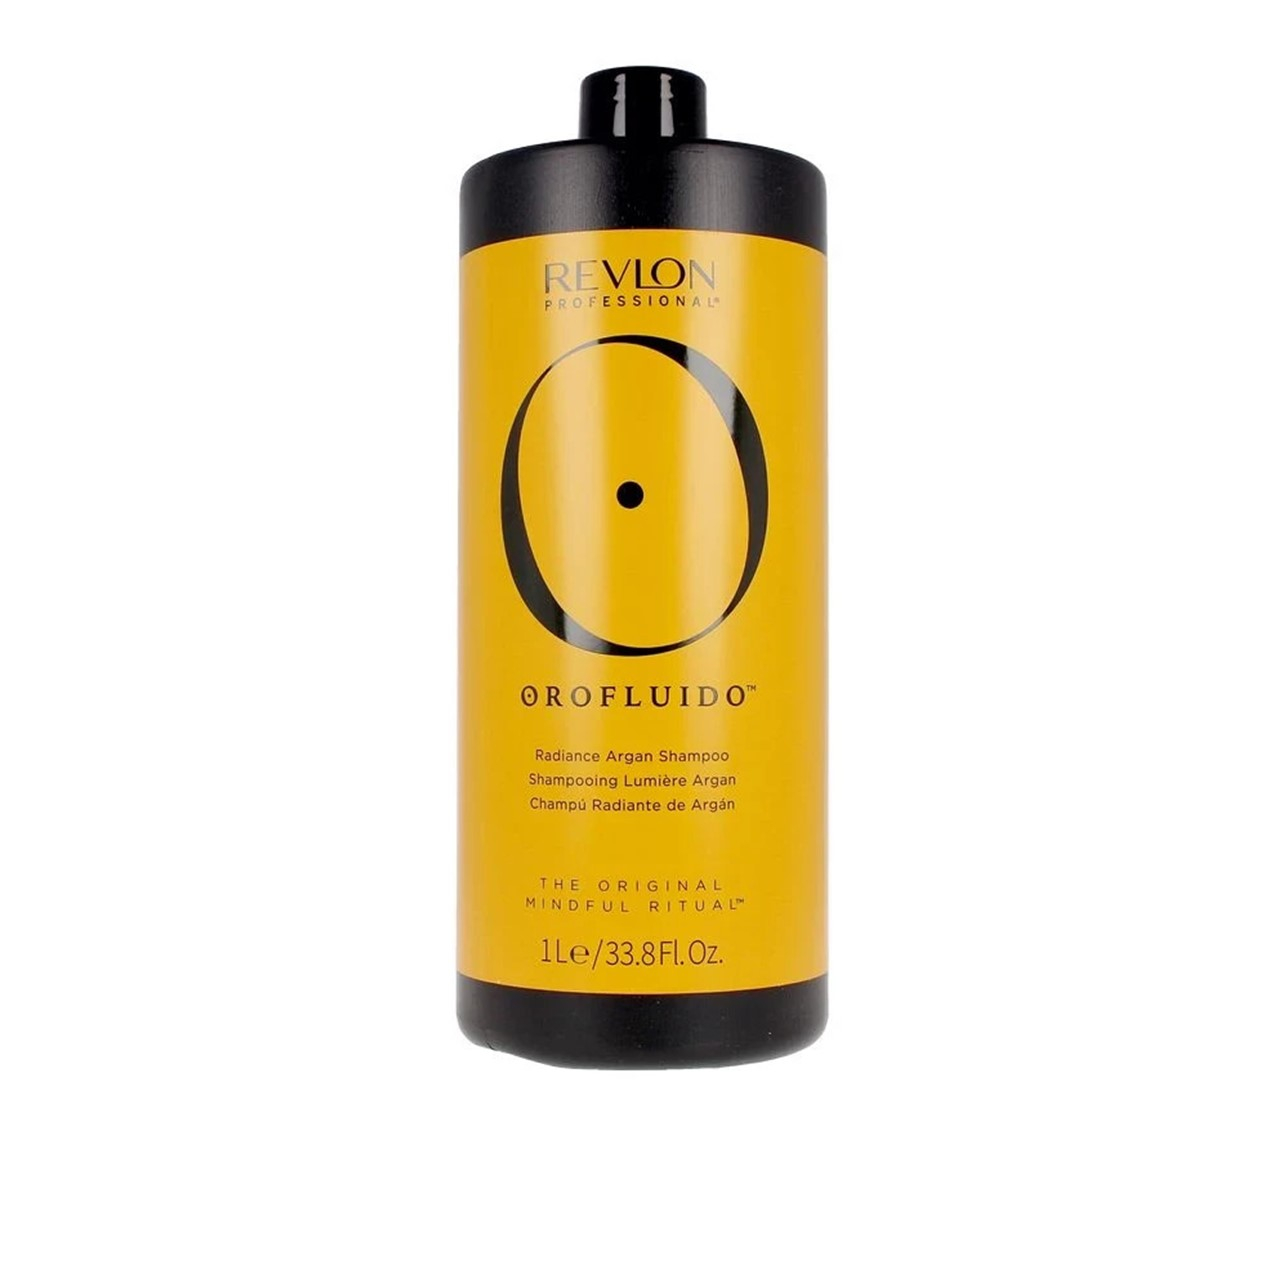 Revlon Professional Orofluido Radiance Argan Shampoo 1L (33.8 fl oz)